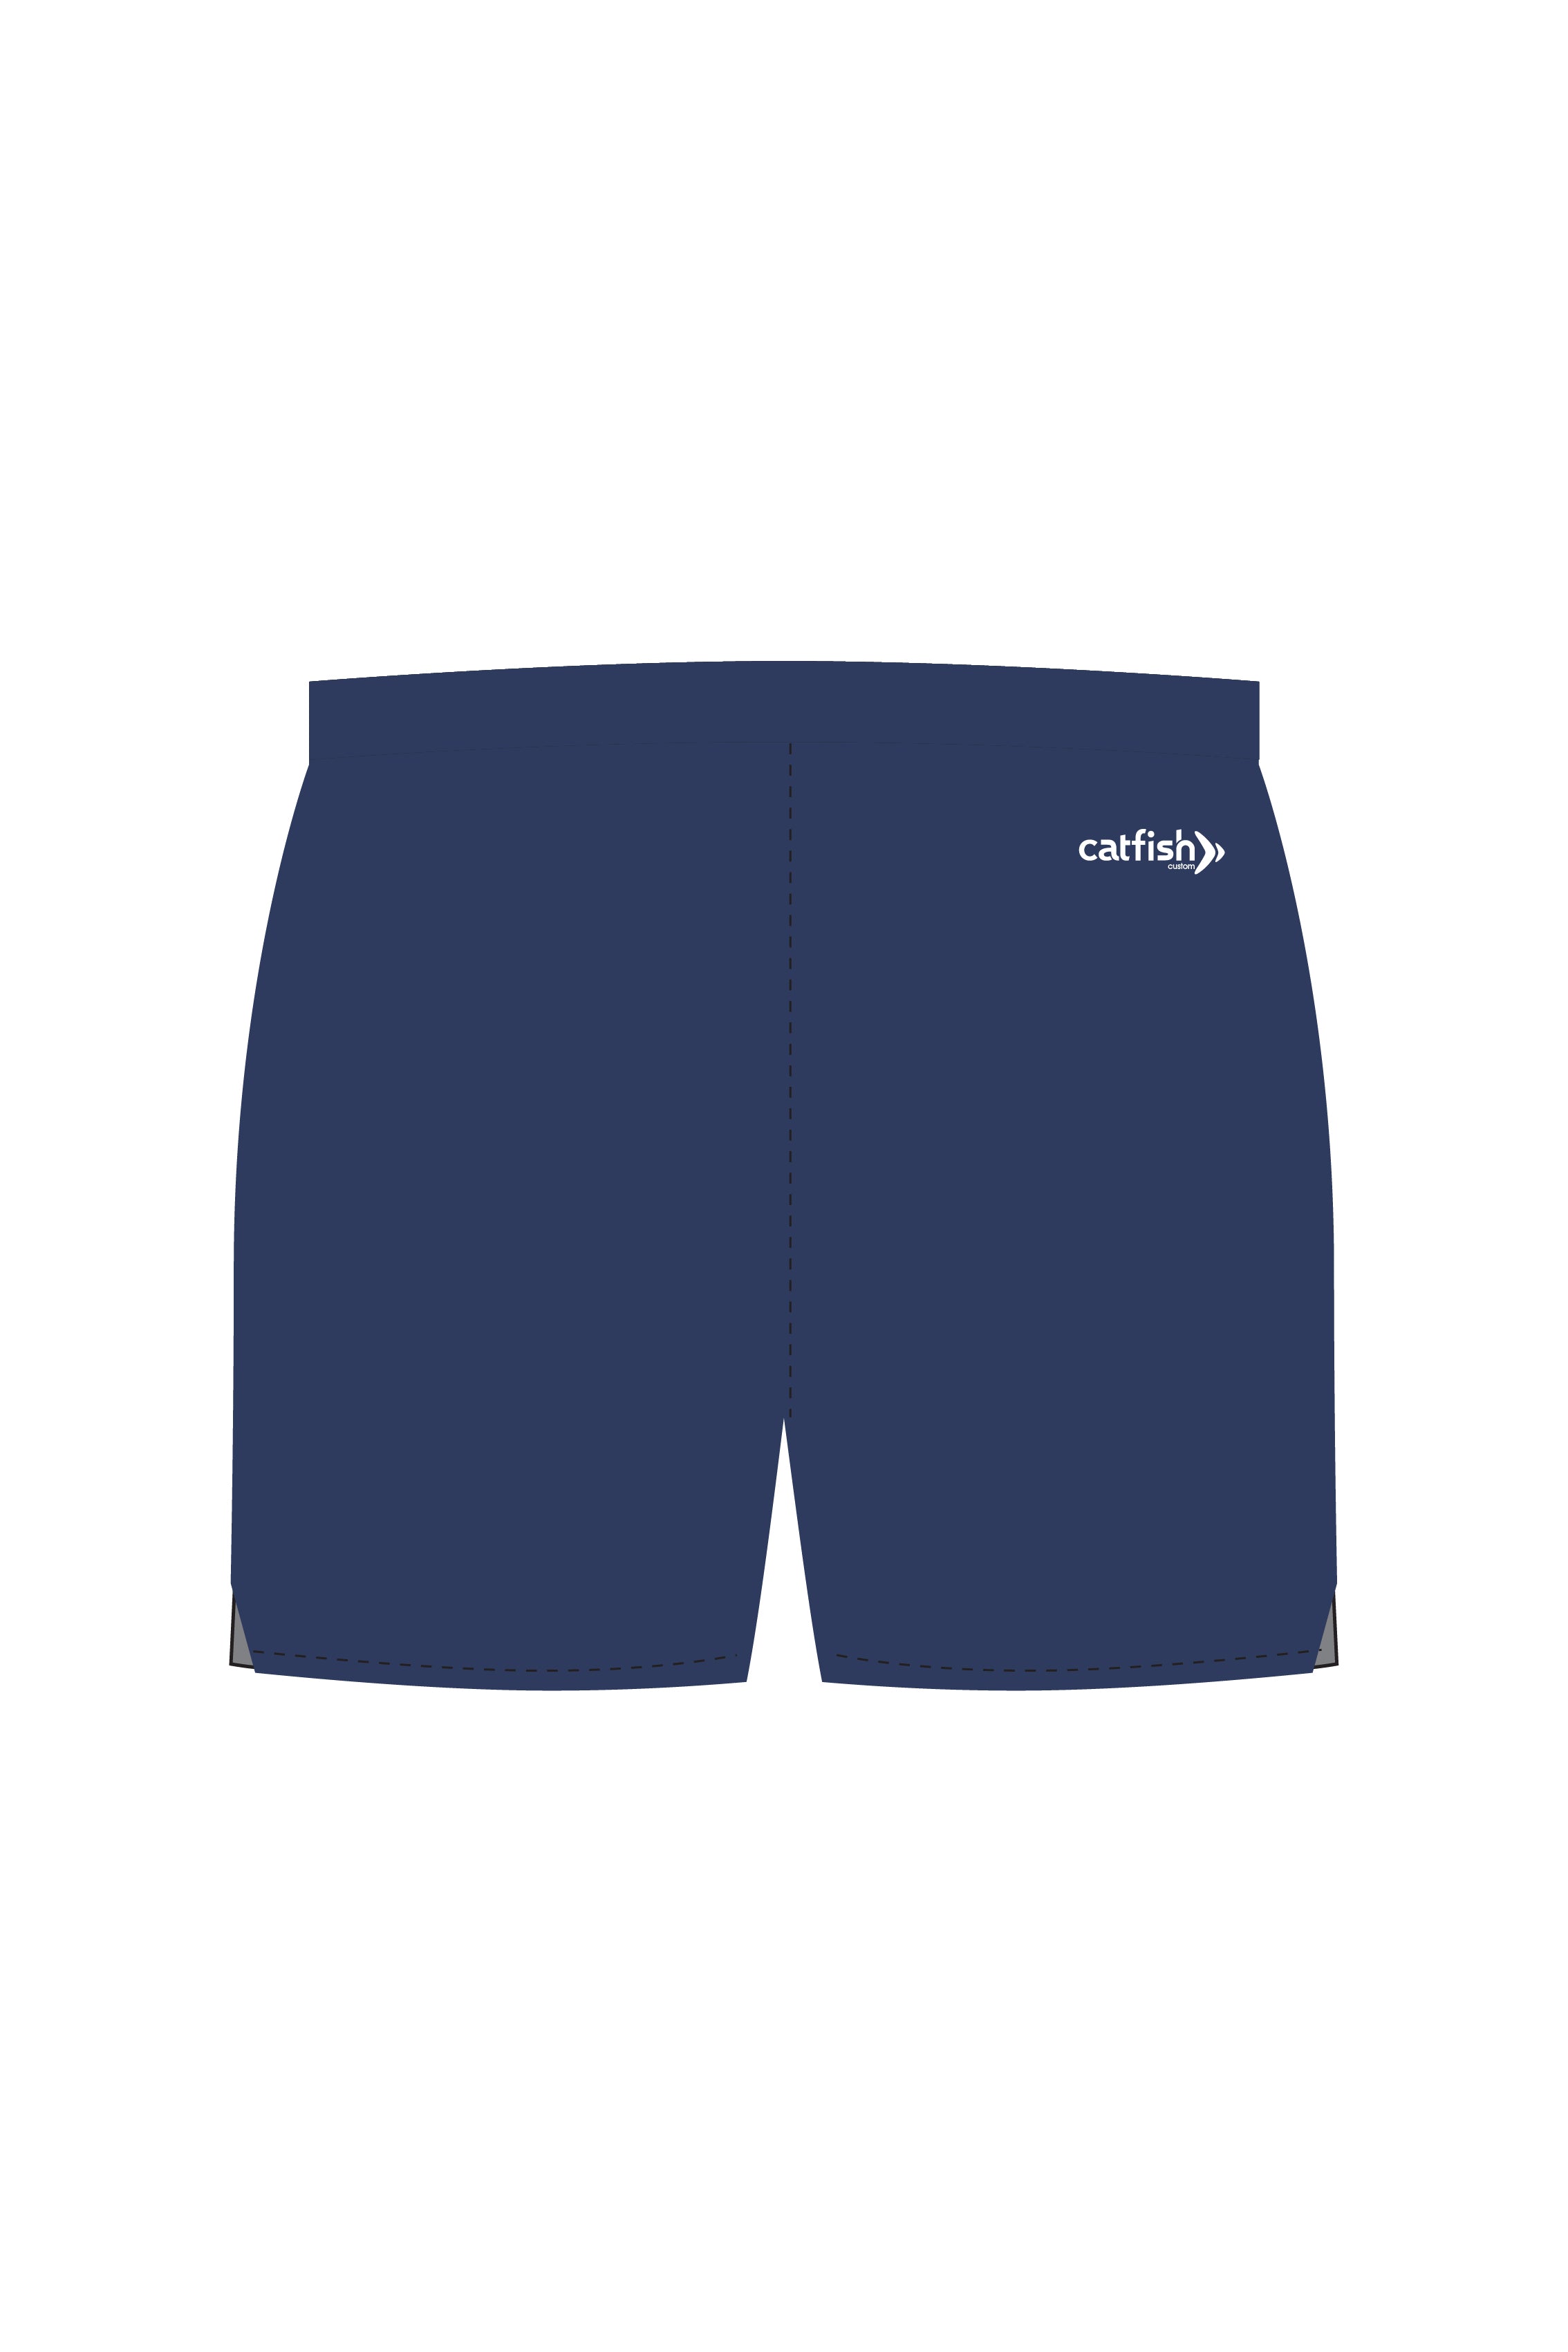 Hervey Bay Training Shorts - Kid's